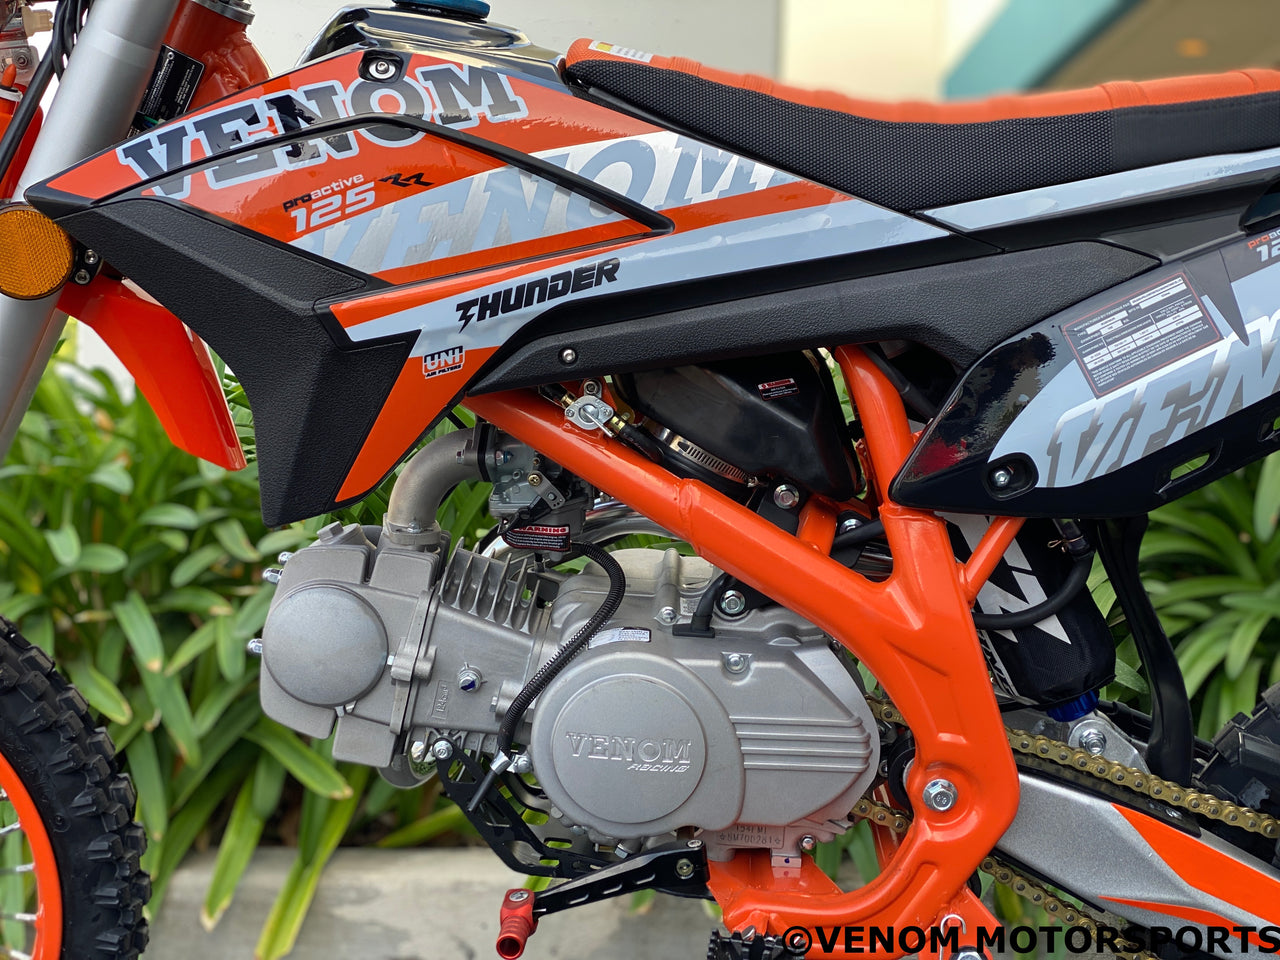 Venom Thunder | 125cc Dirt Bike | 4 Speed | Off Road